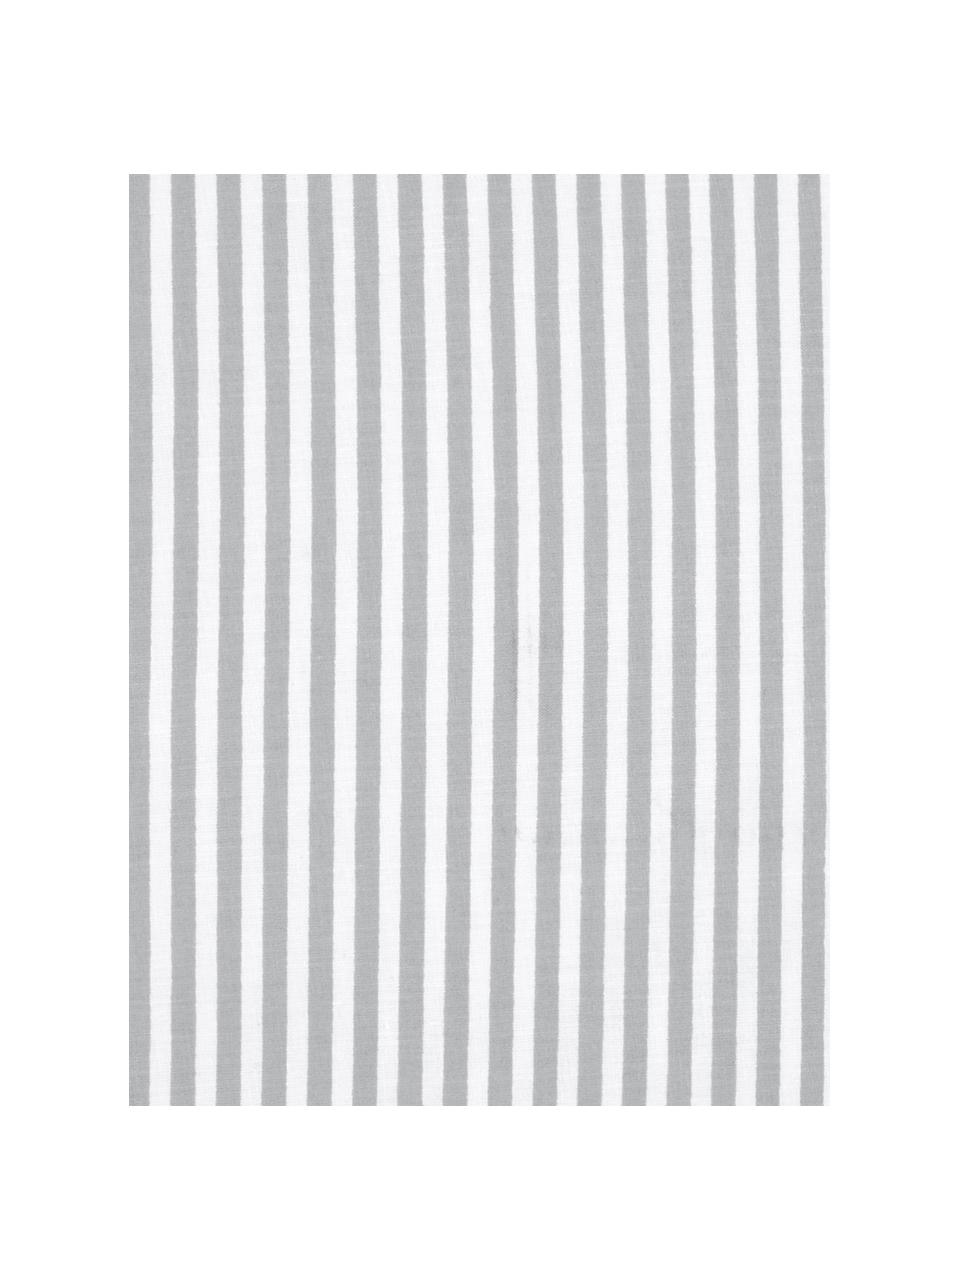 Funda de almohada de algodón Lorena, Gris claro, blanco crema, An 45 x L 110 cm